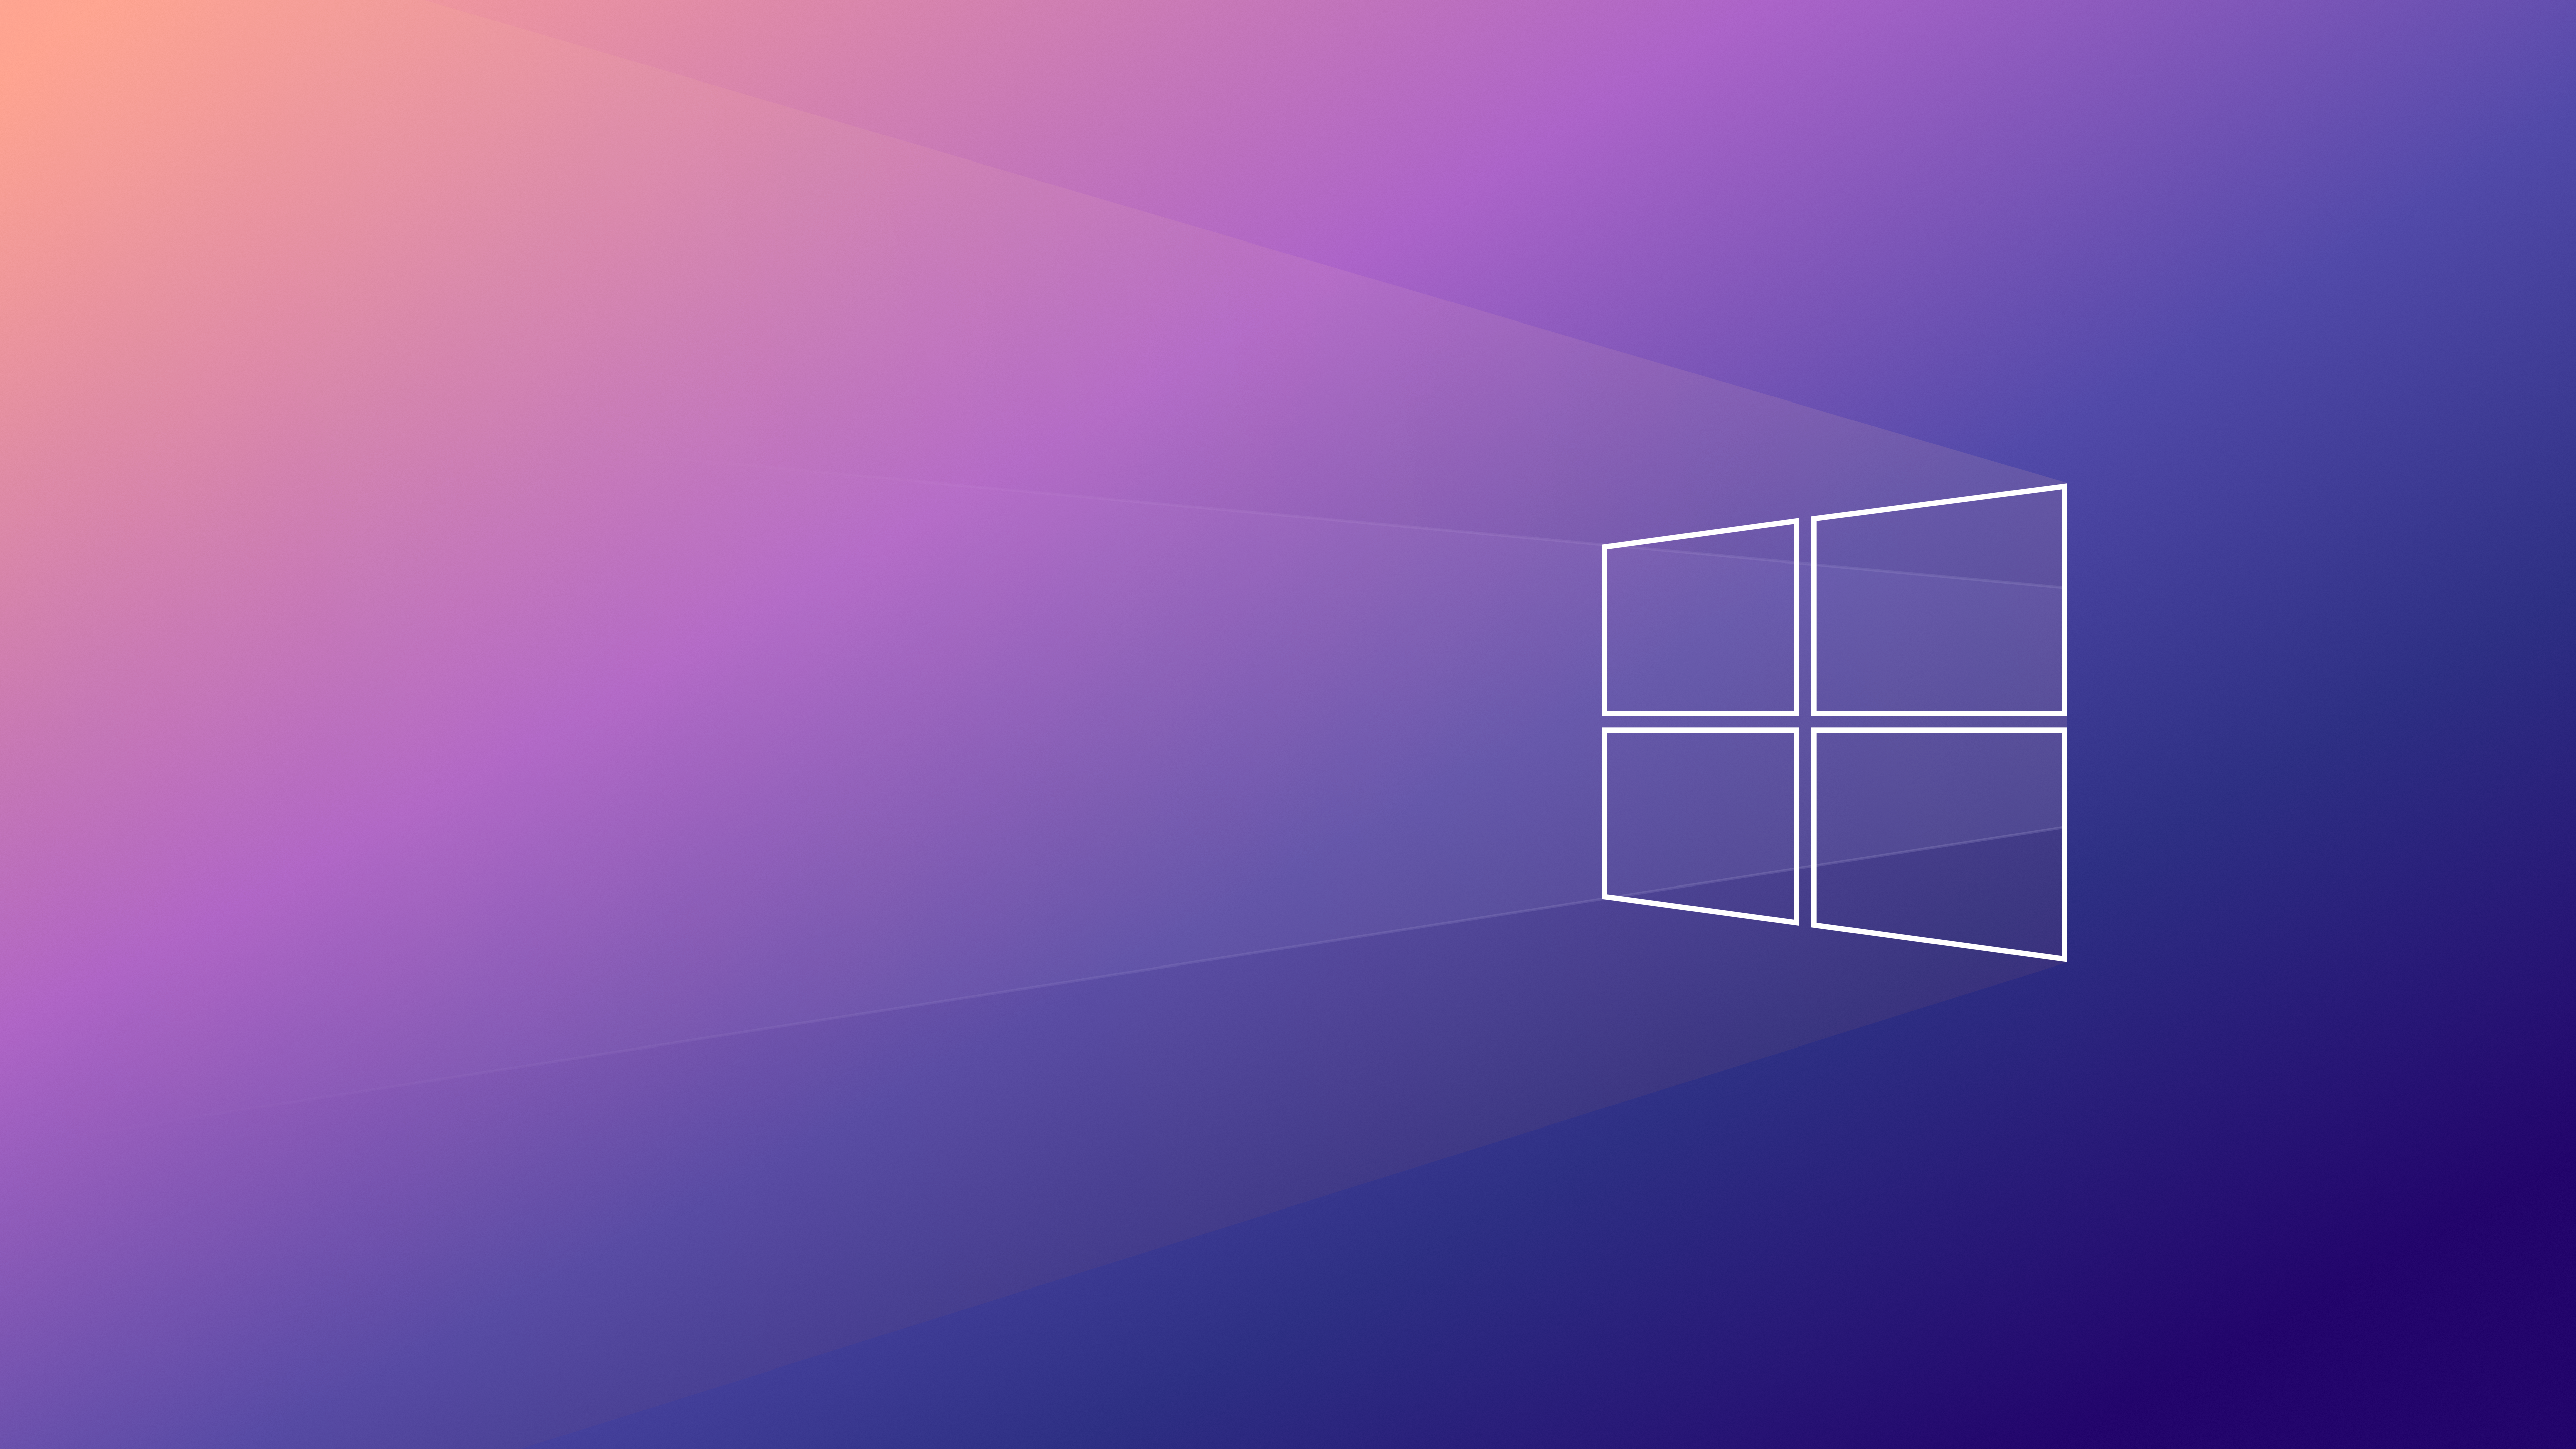 Windows 10 default wallpaper dark purple 4k by dpcdpc11